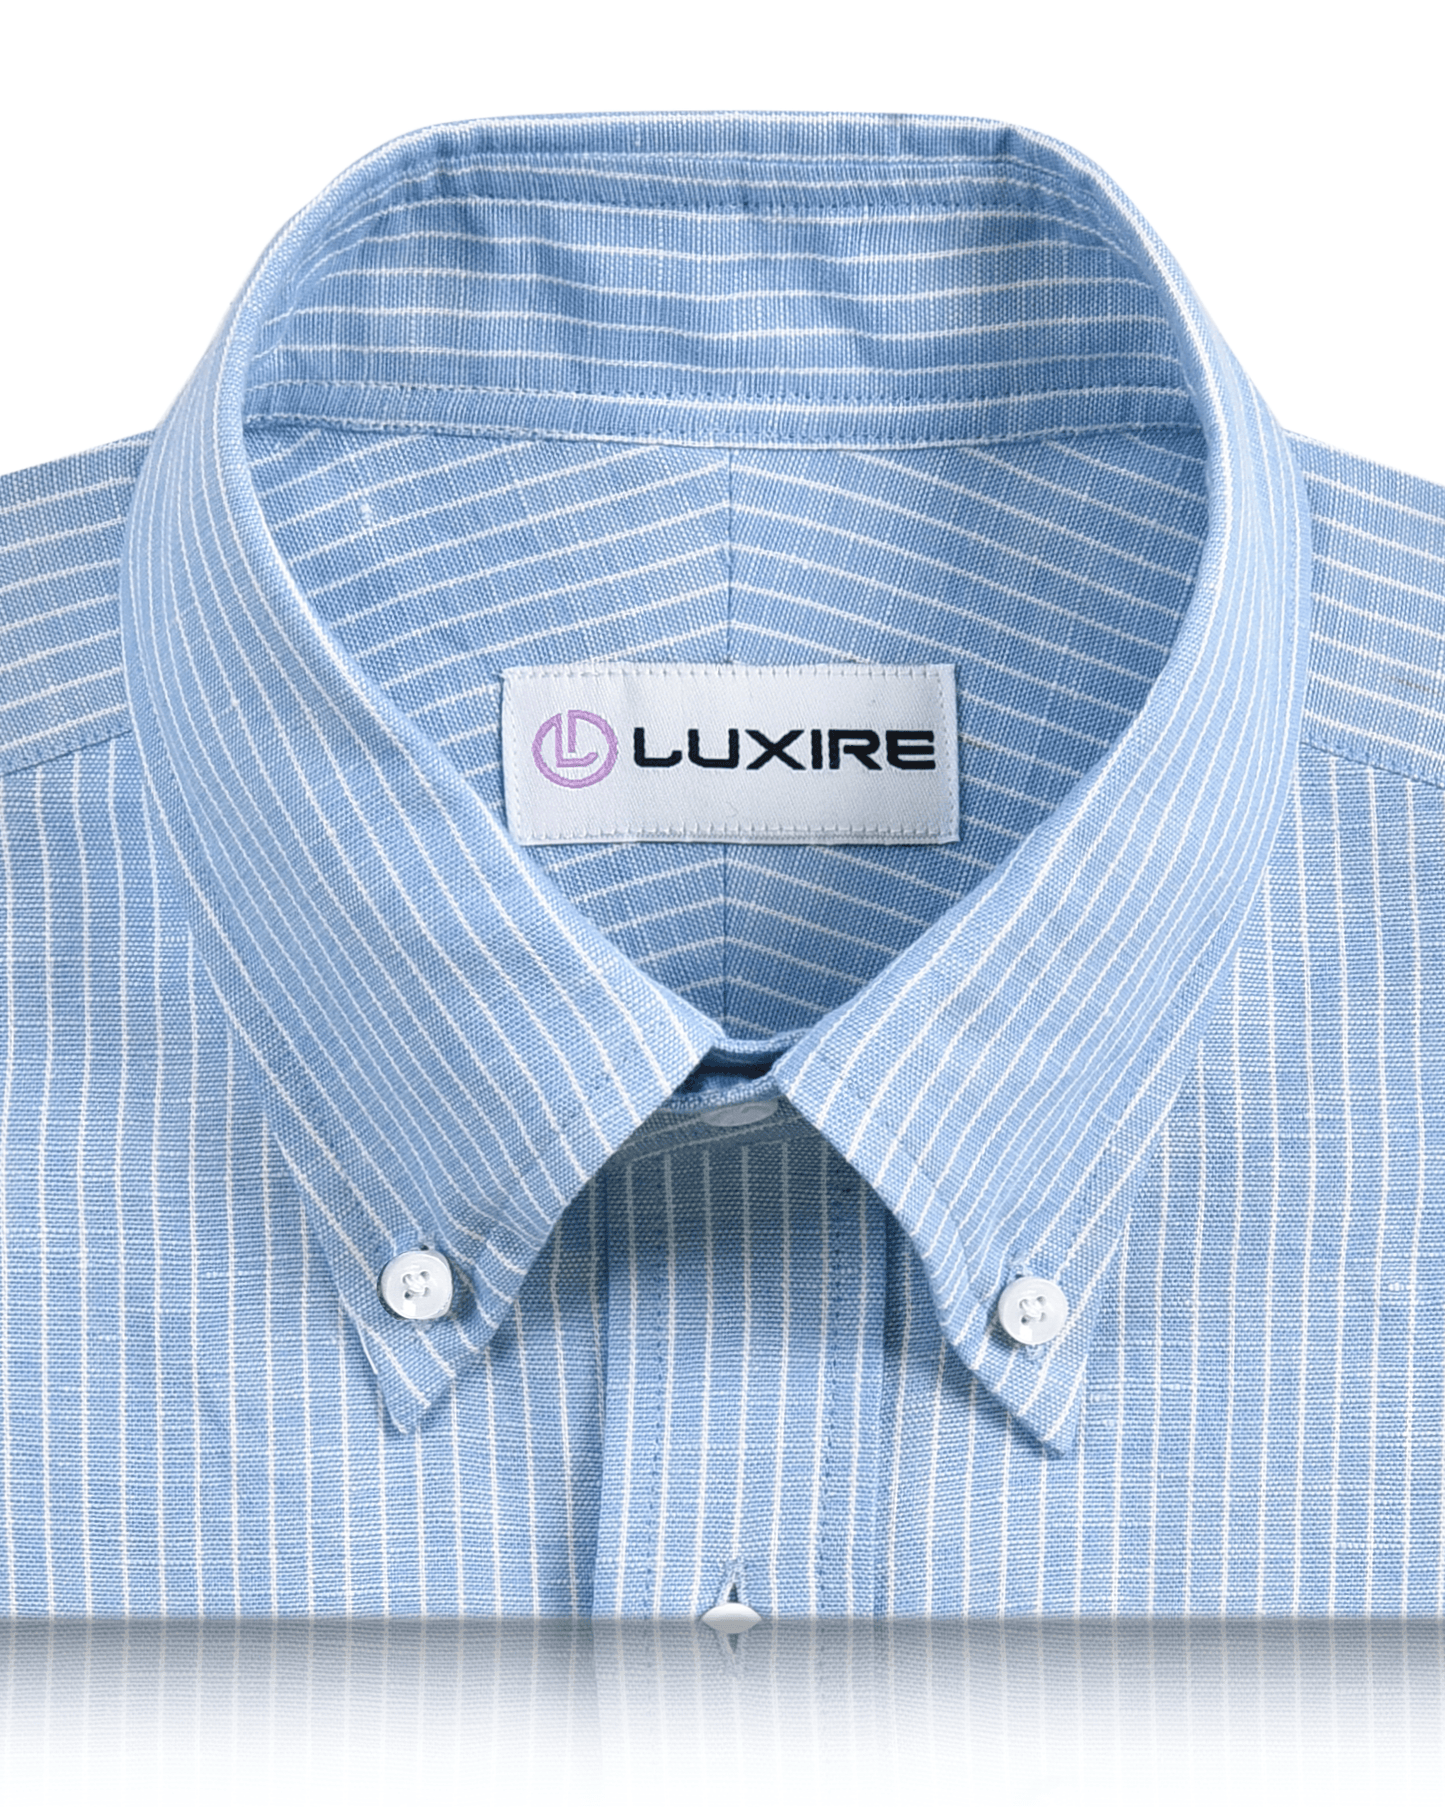 Cotton Linen : White Pin Stripes On Blue Shirt